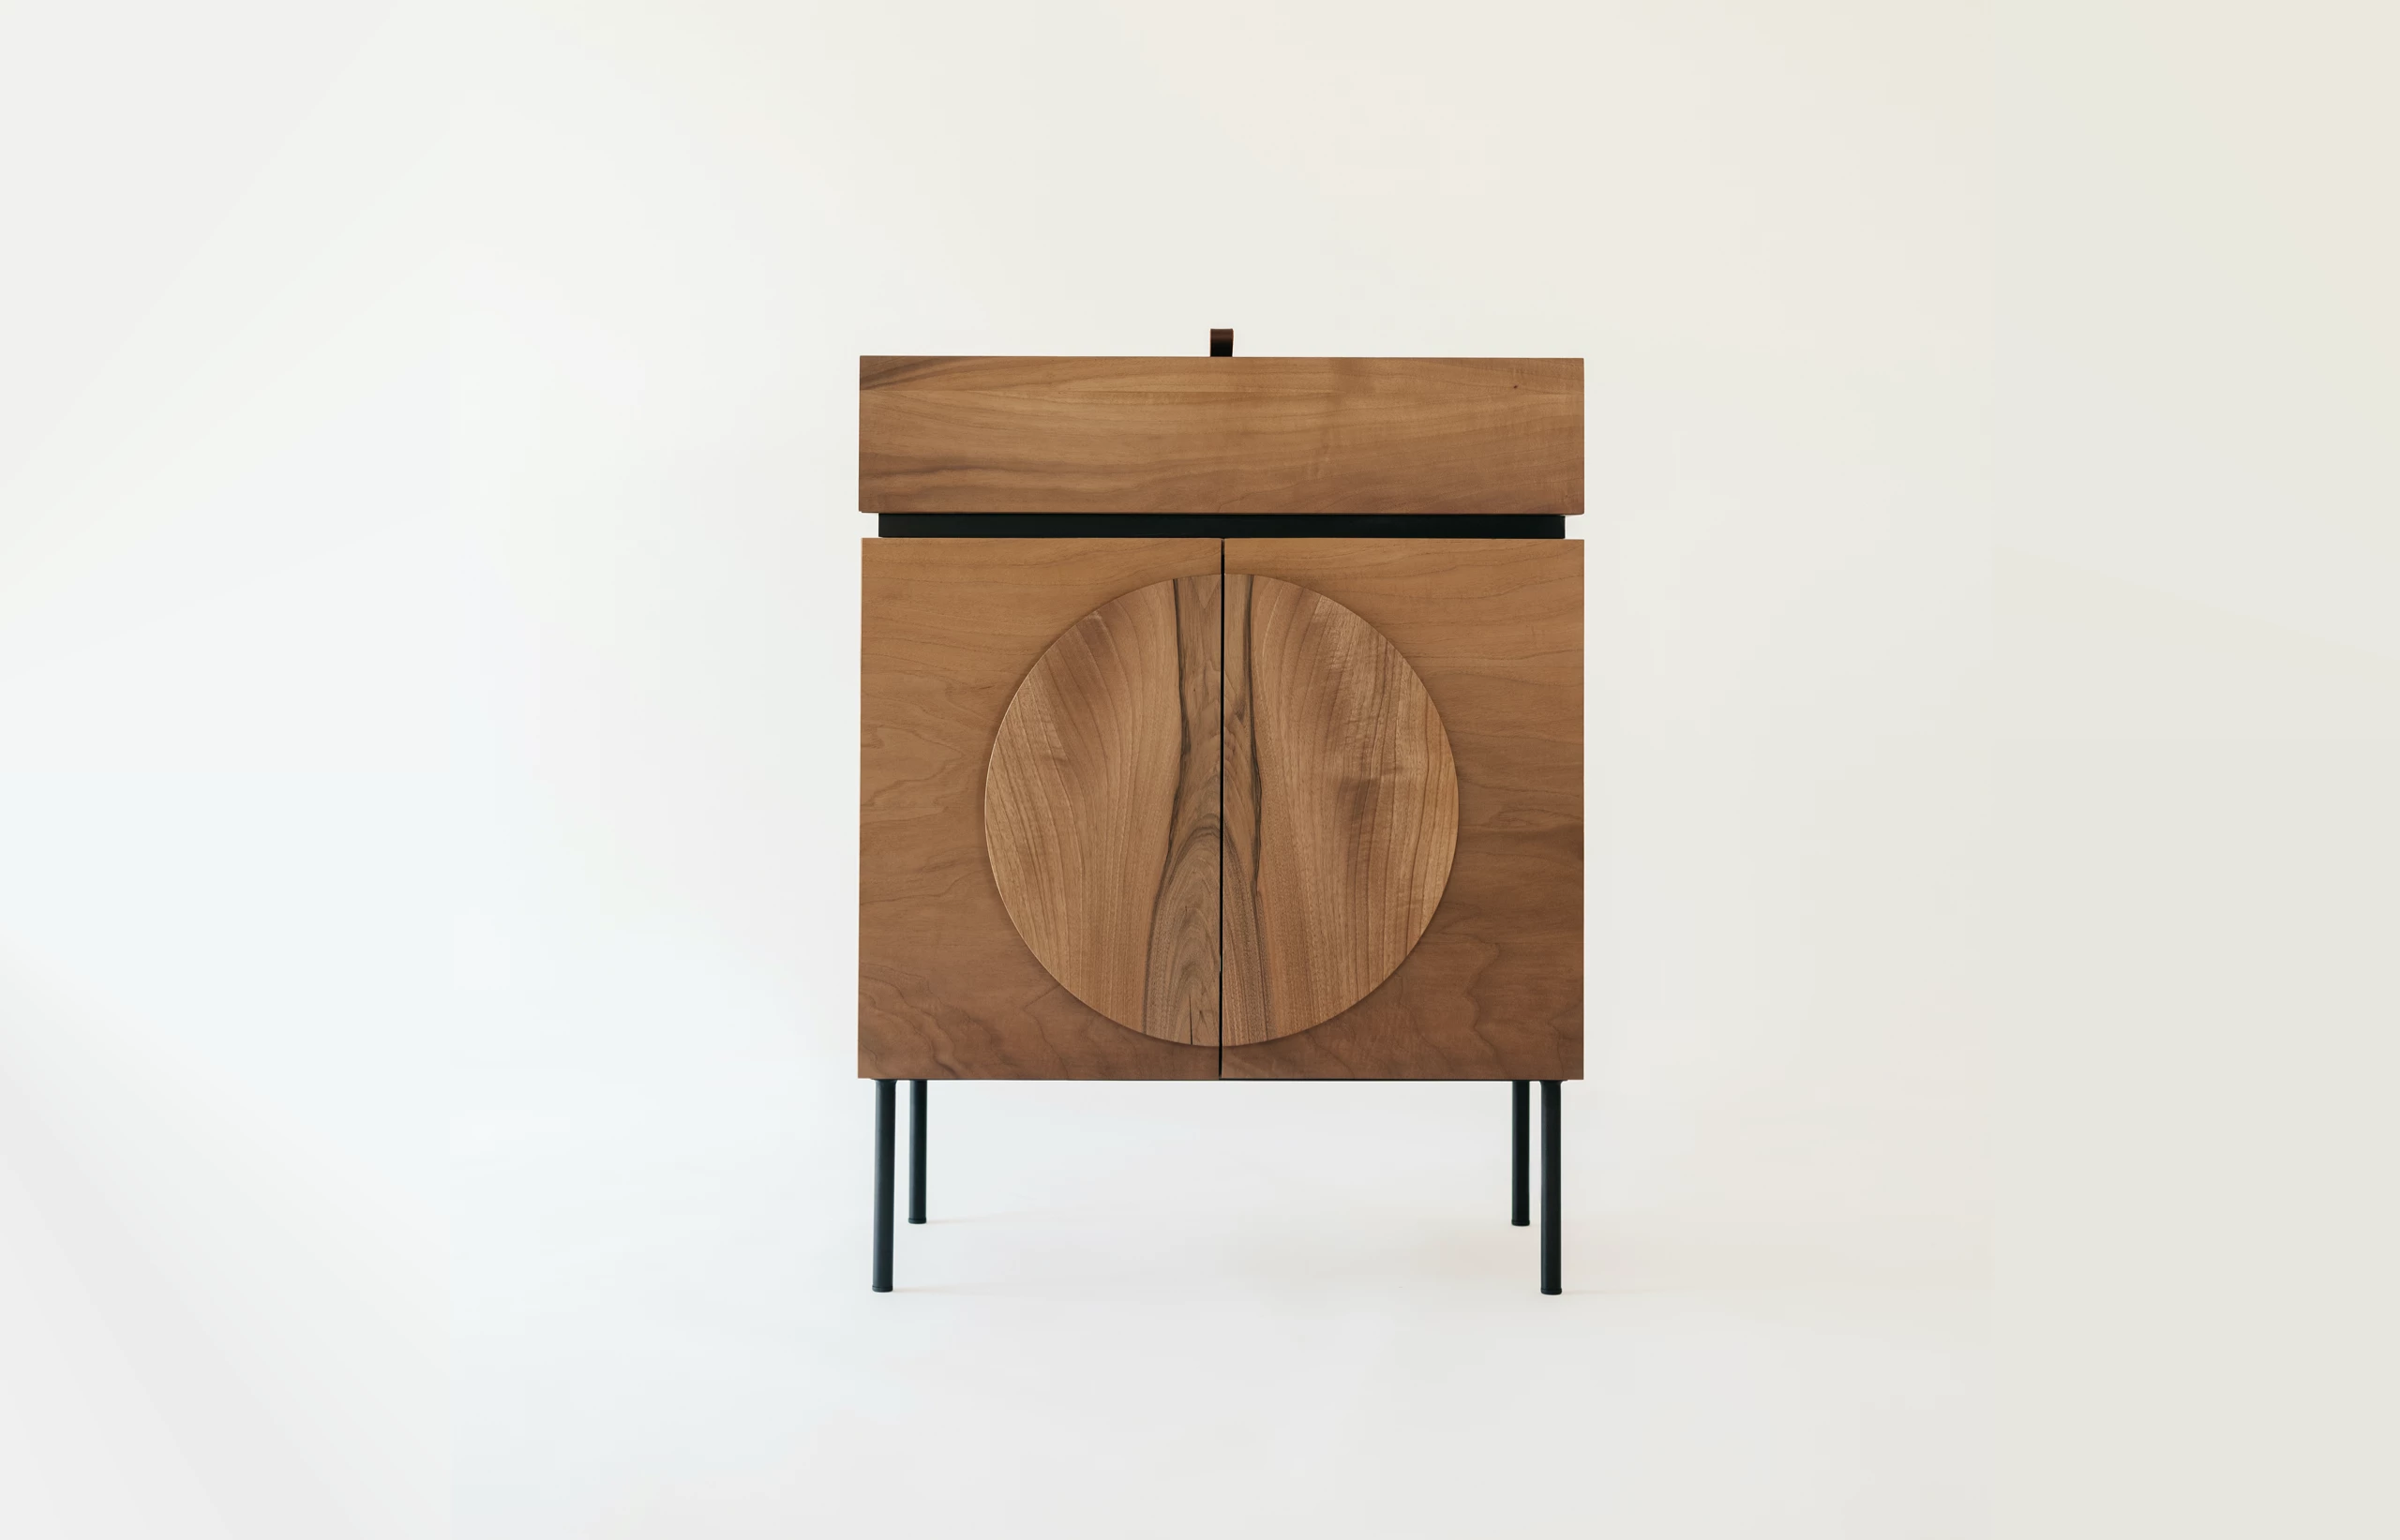 Gianni - Rinocca (gianni walnut solid wood cabinet)